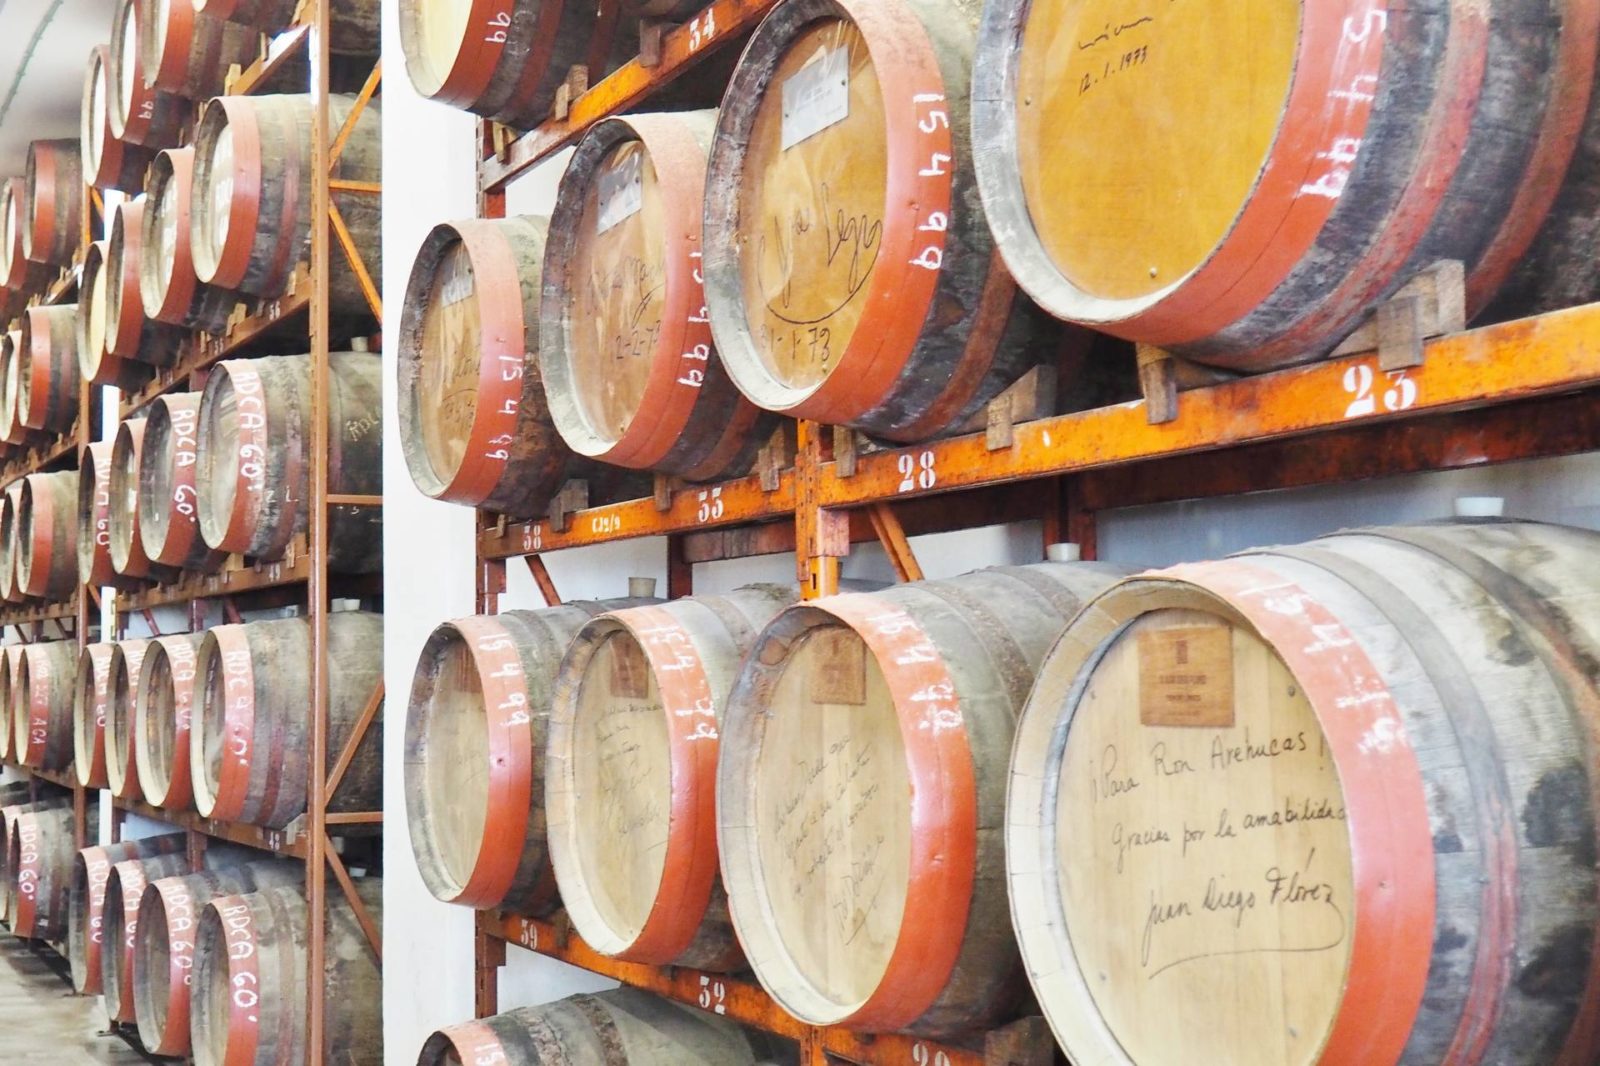 Arehucas Rum Distillery